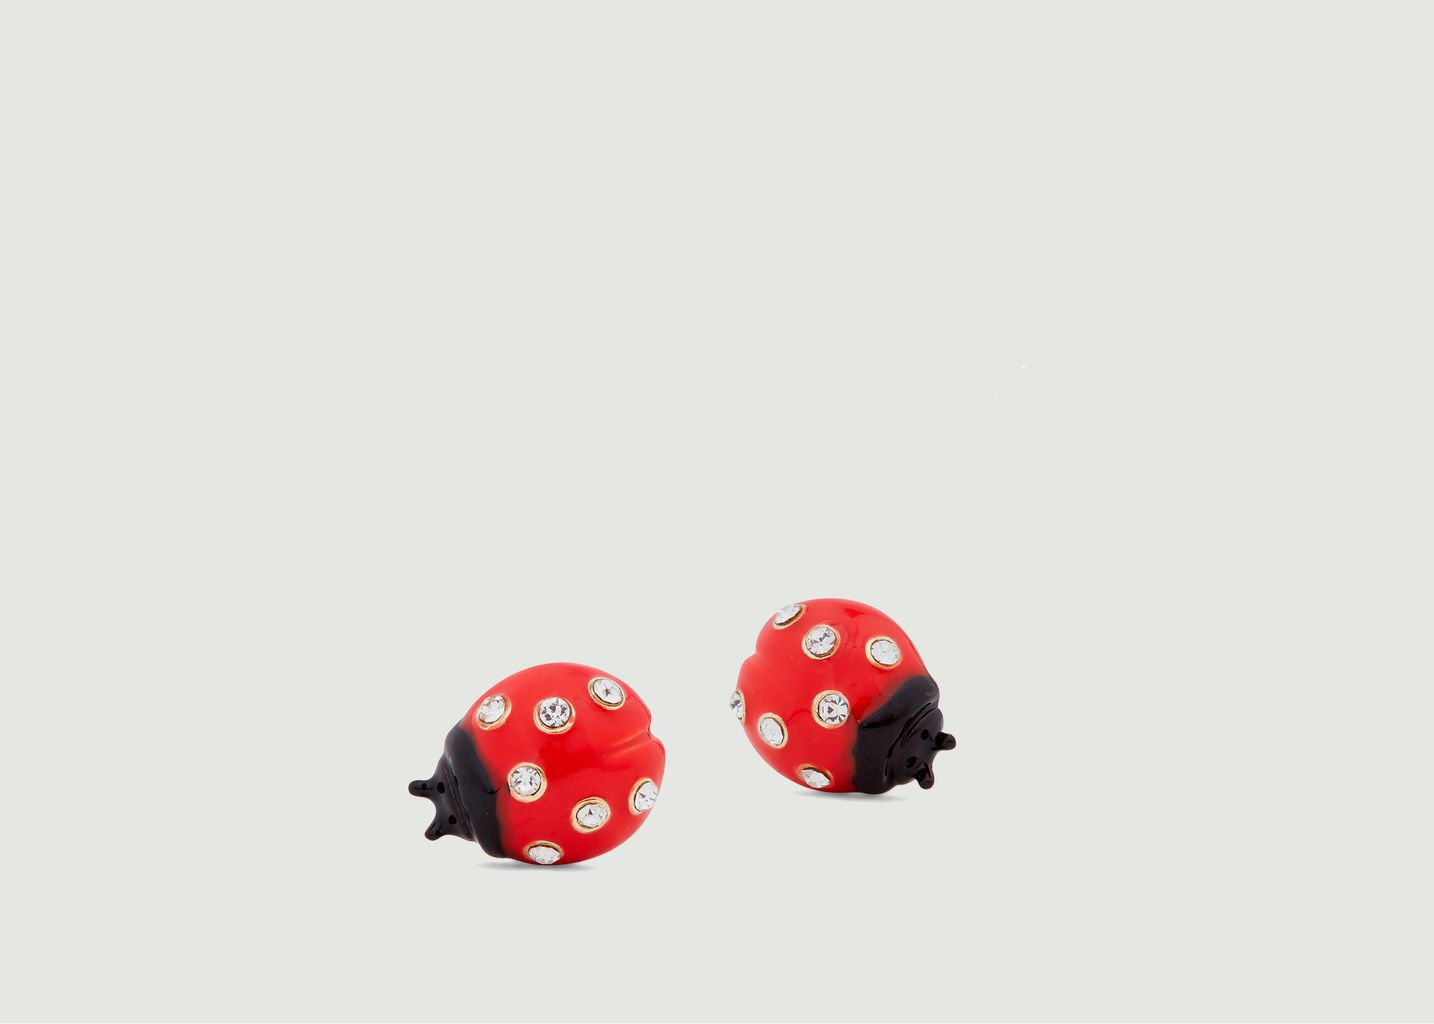 Ladybug earrings - Les Néréides